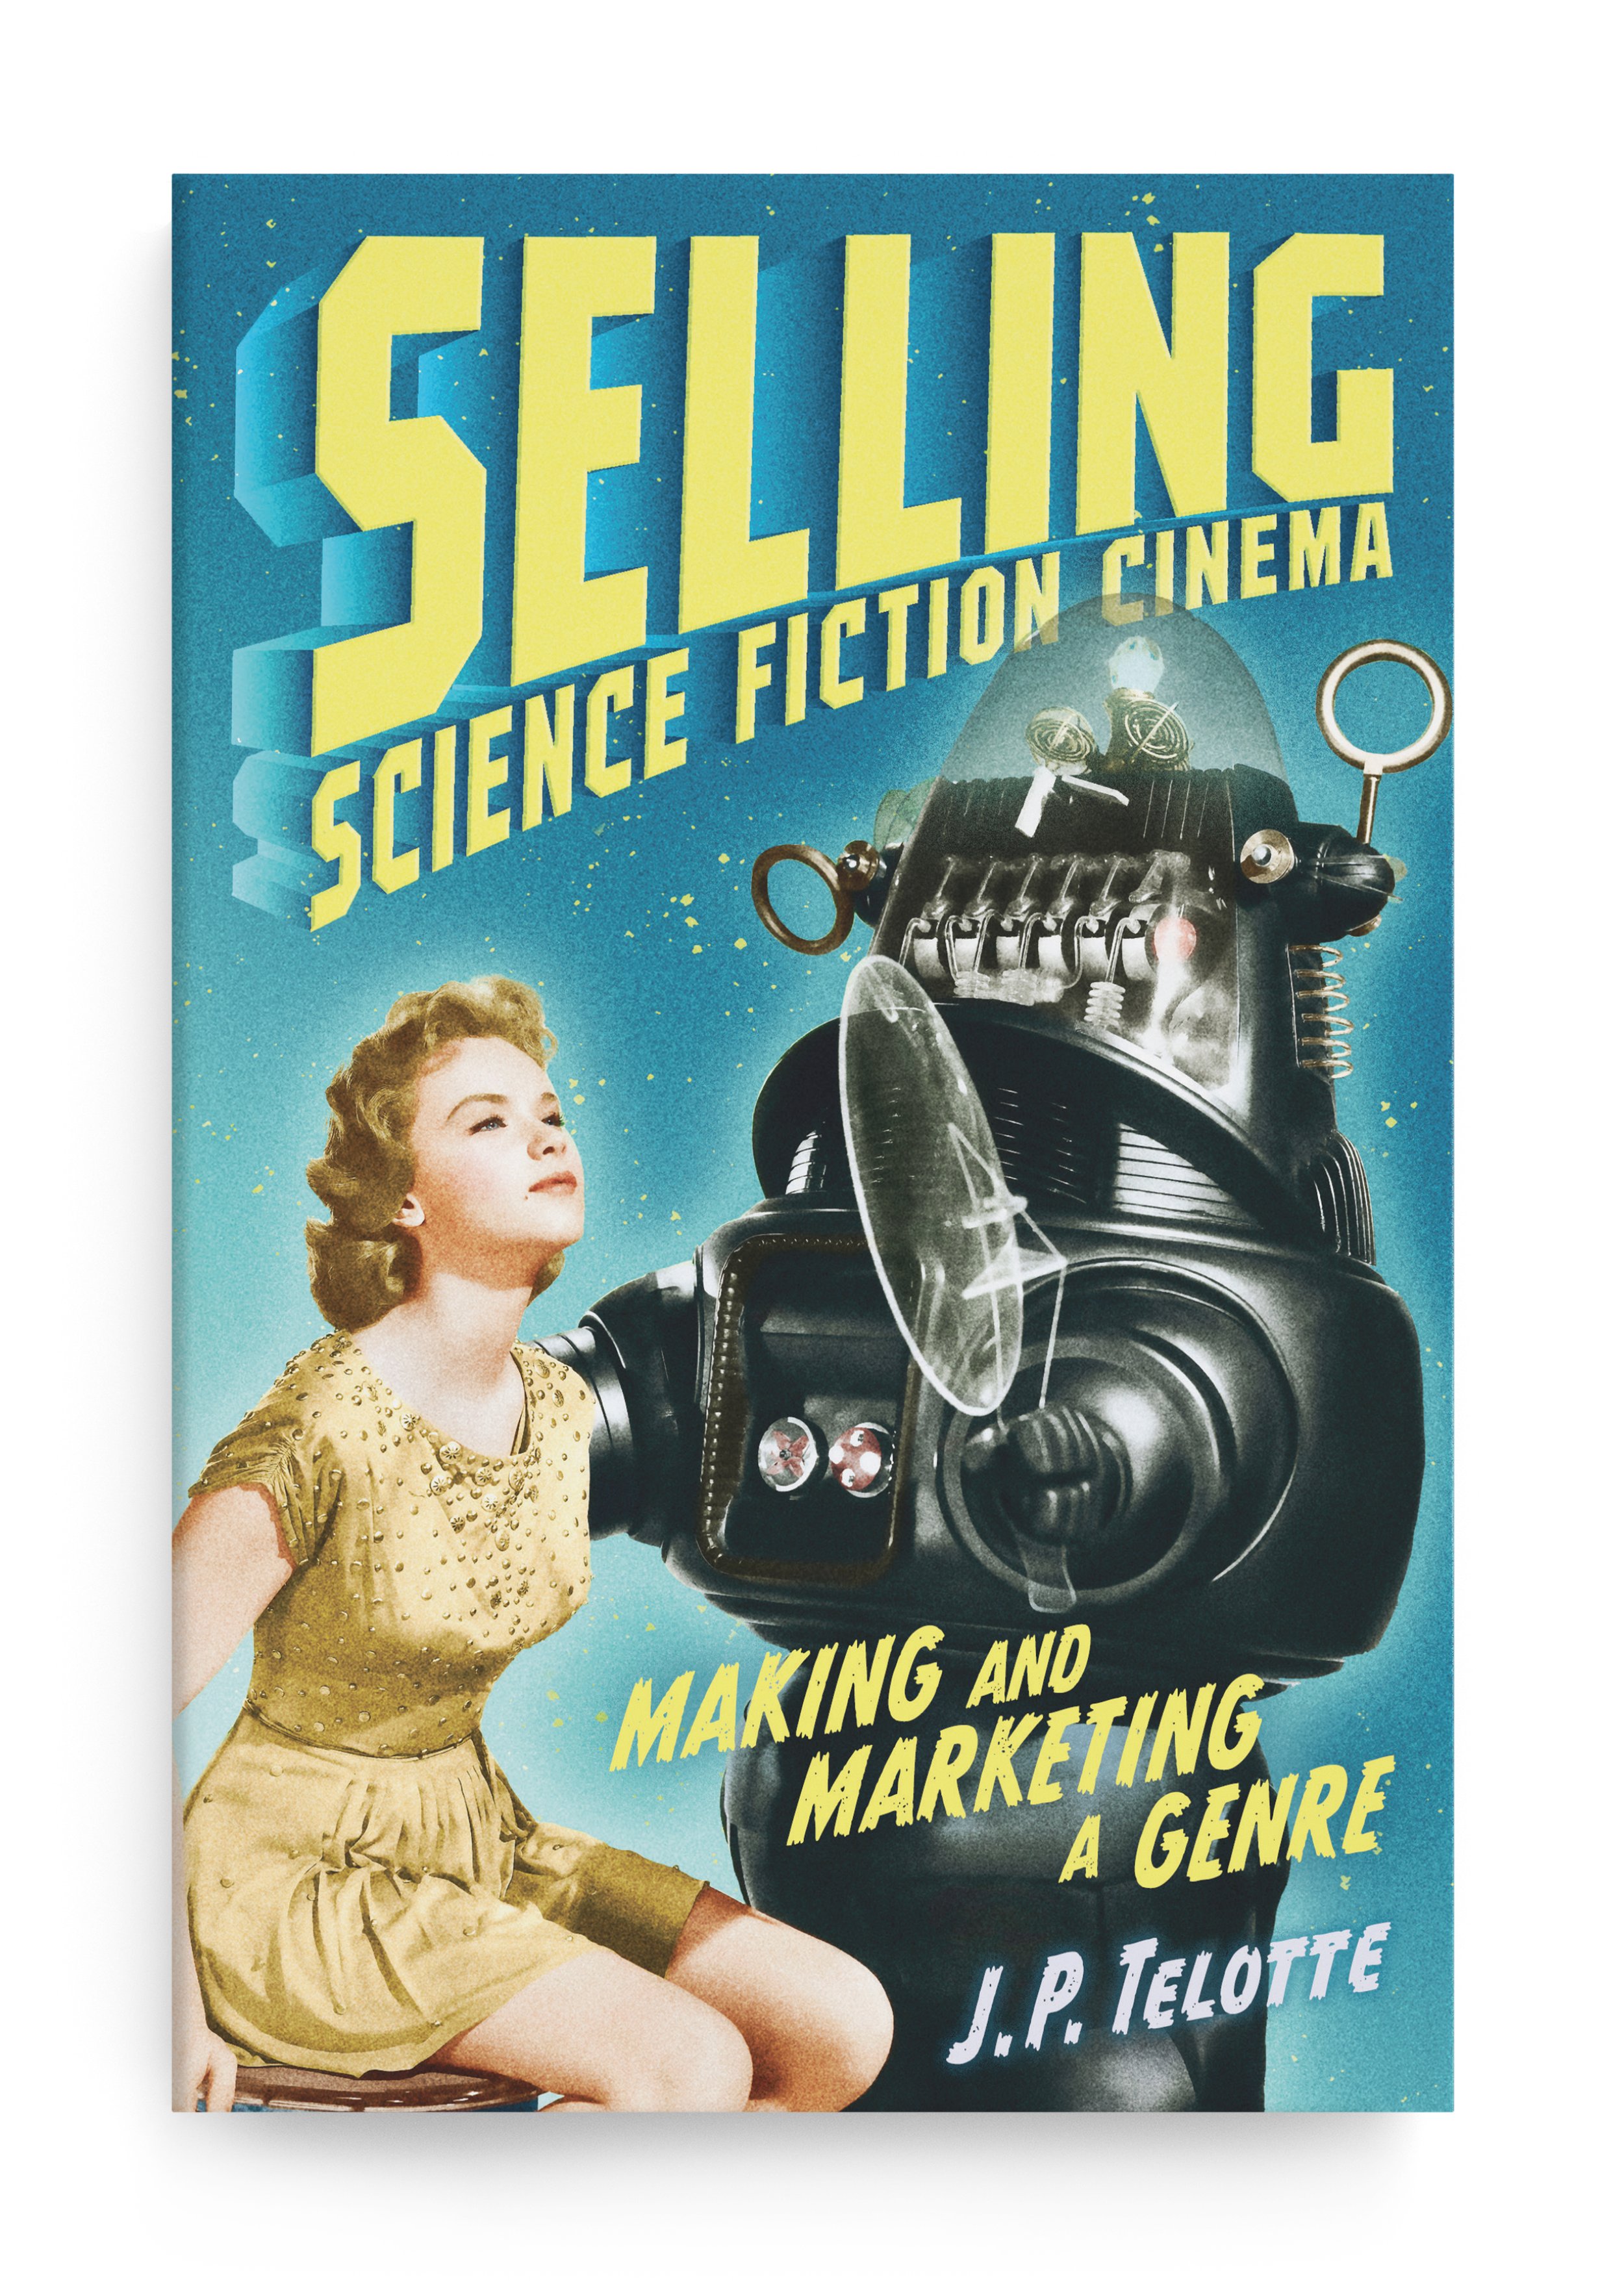 SellingScienceFiction_site.jpg